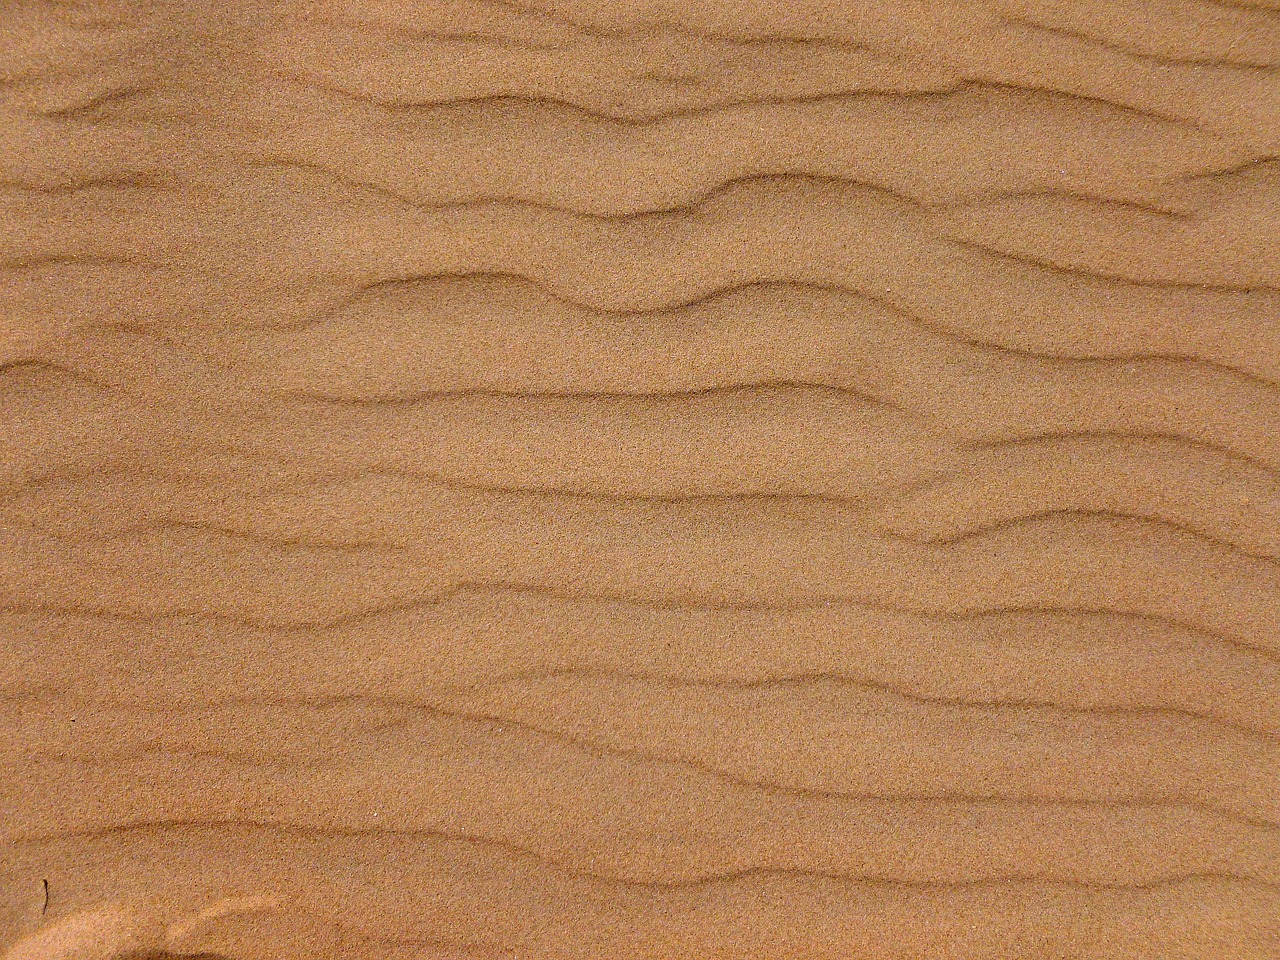 sand wave texture free photo